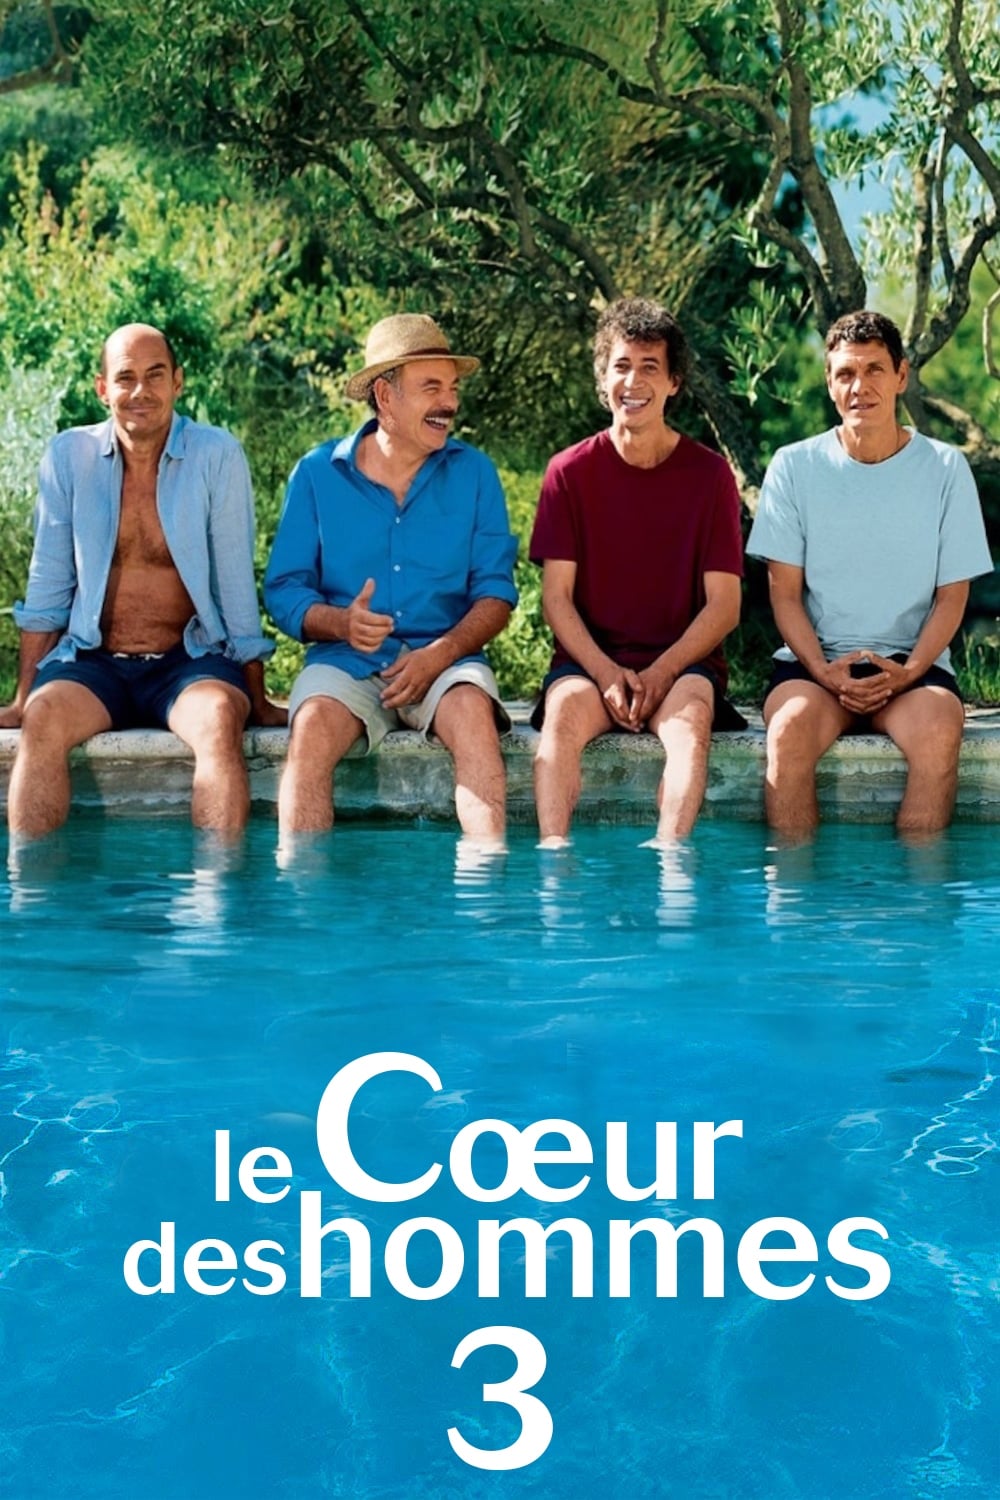 Frenchmen 3 (2013)